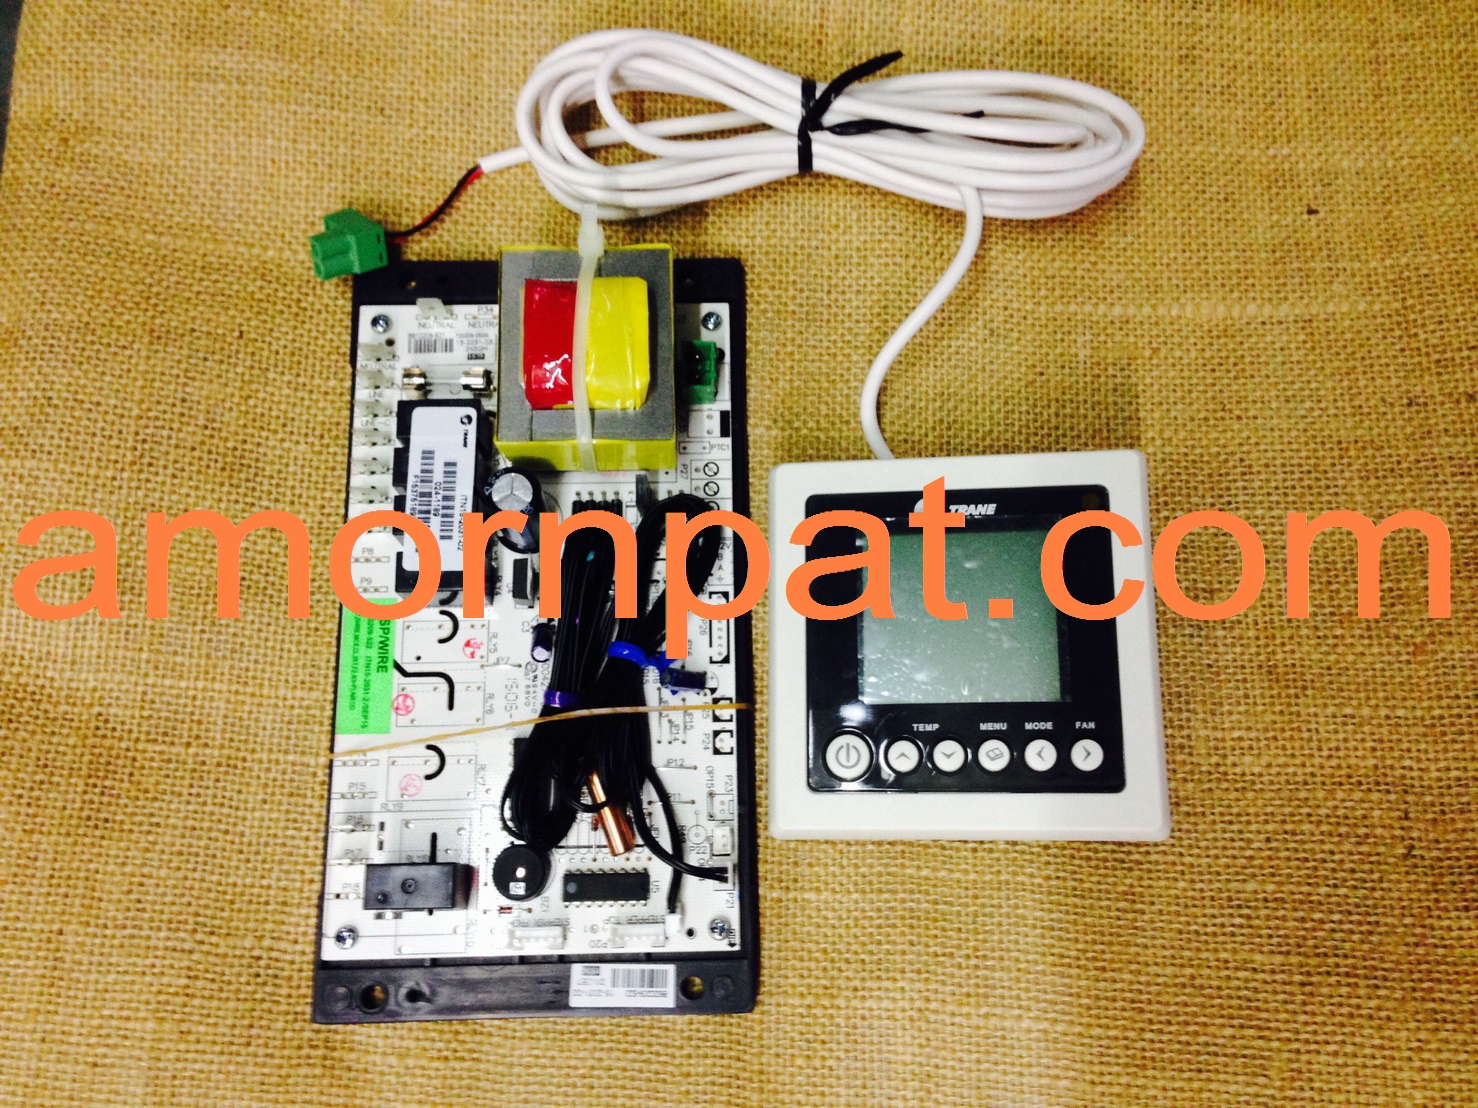 Control Set / Thermostat แผงรับสัญญาณ อะไหล่ สำหรับ เครื่องปรับอากาศ แอร์ เทรน  Trane